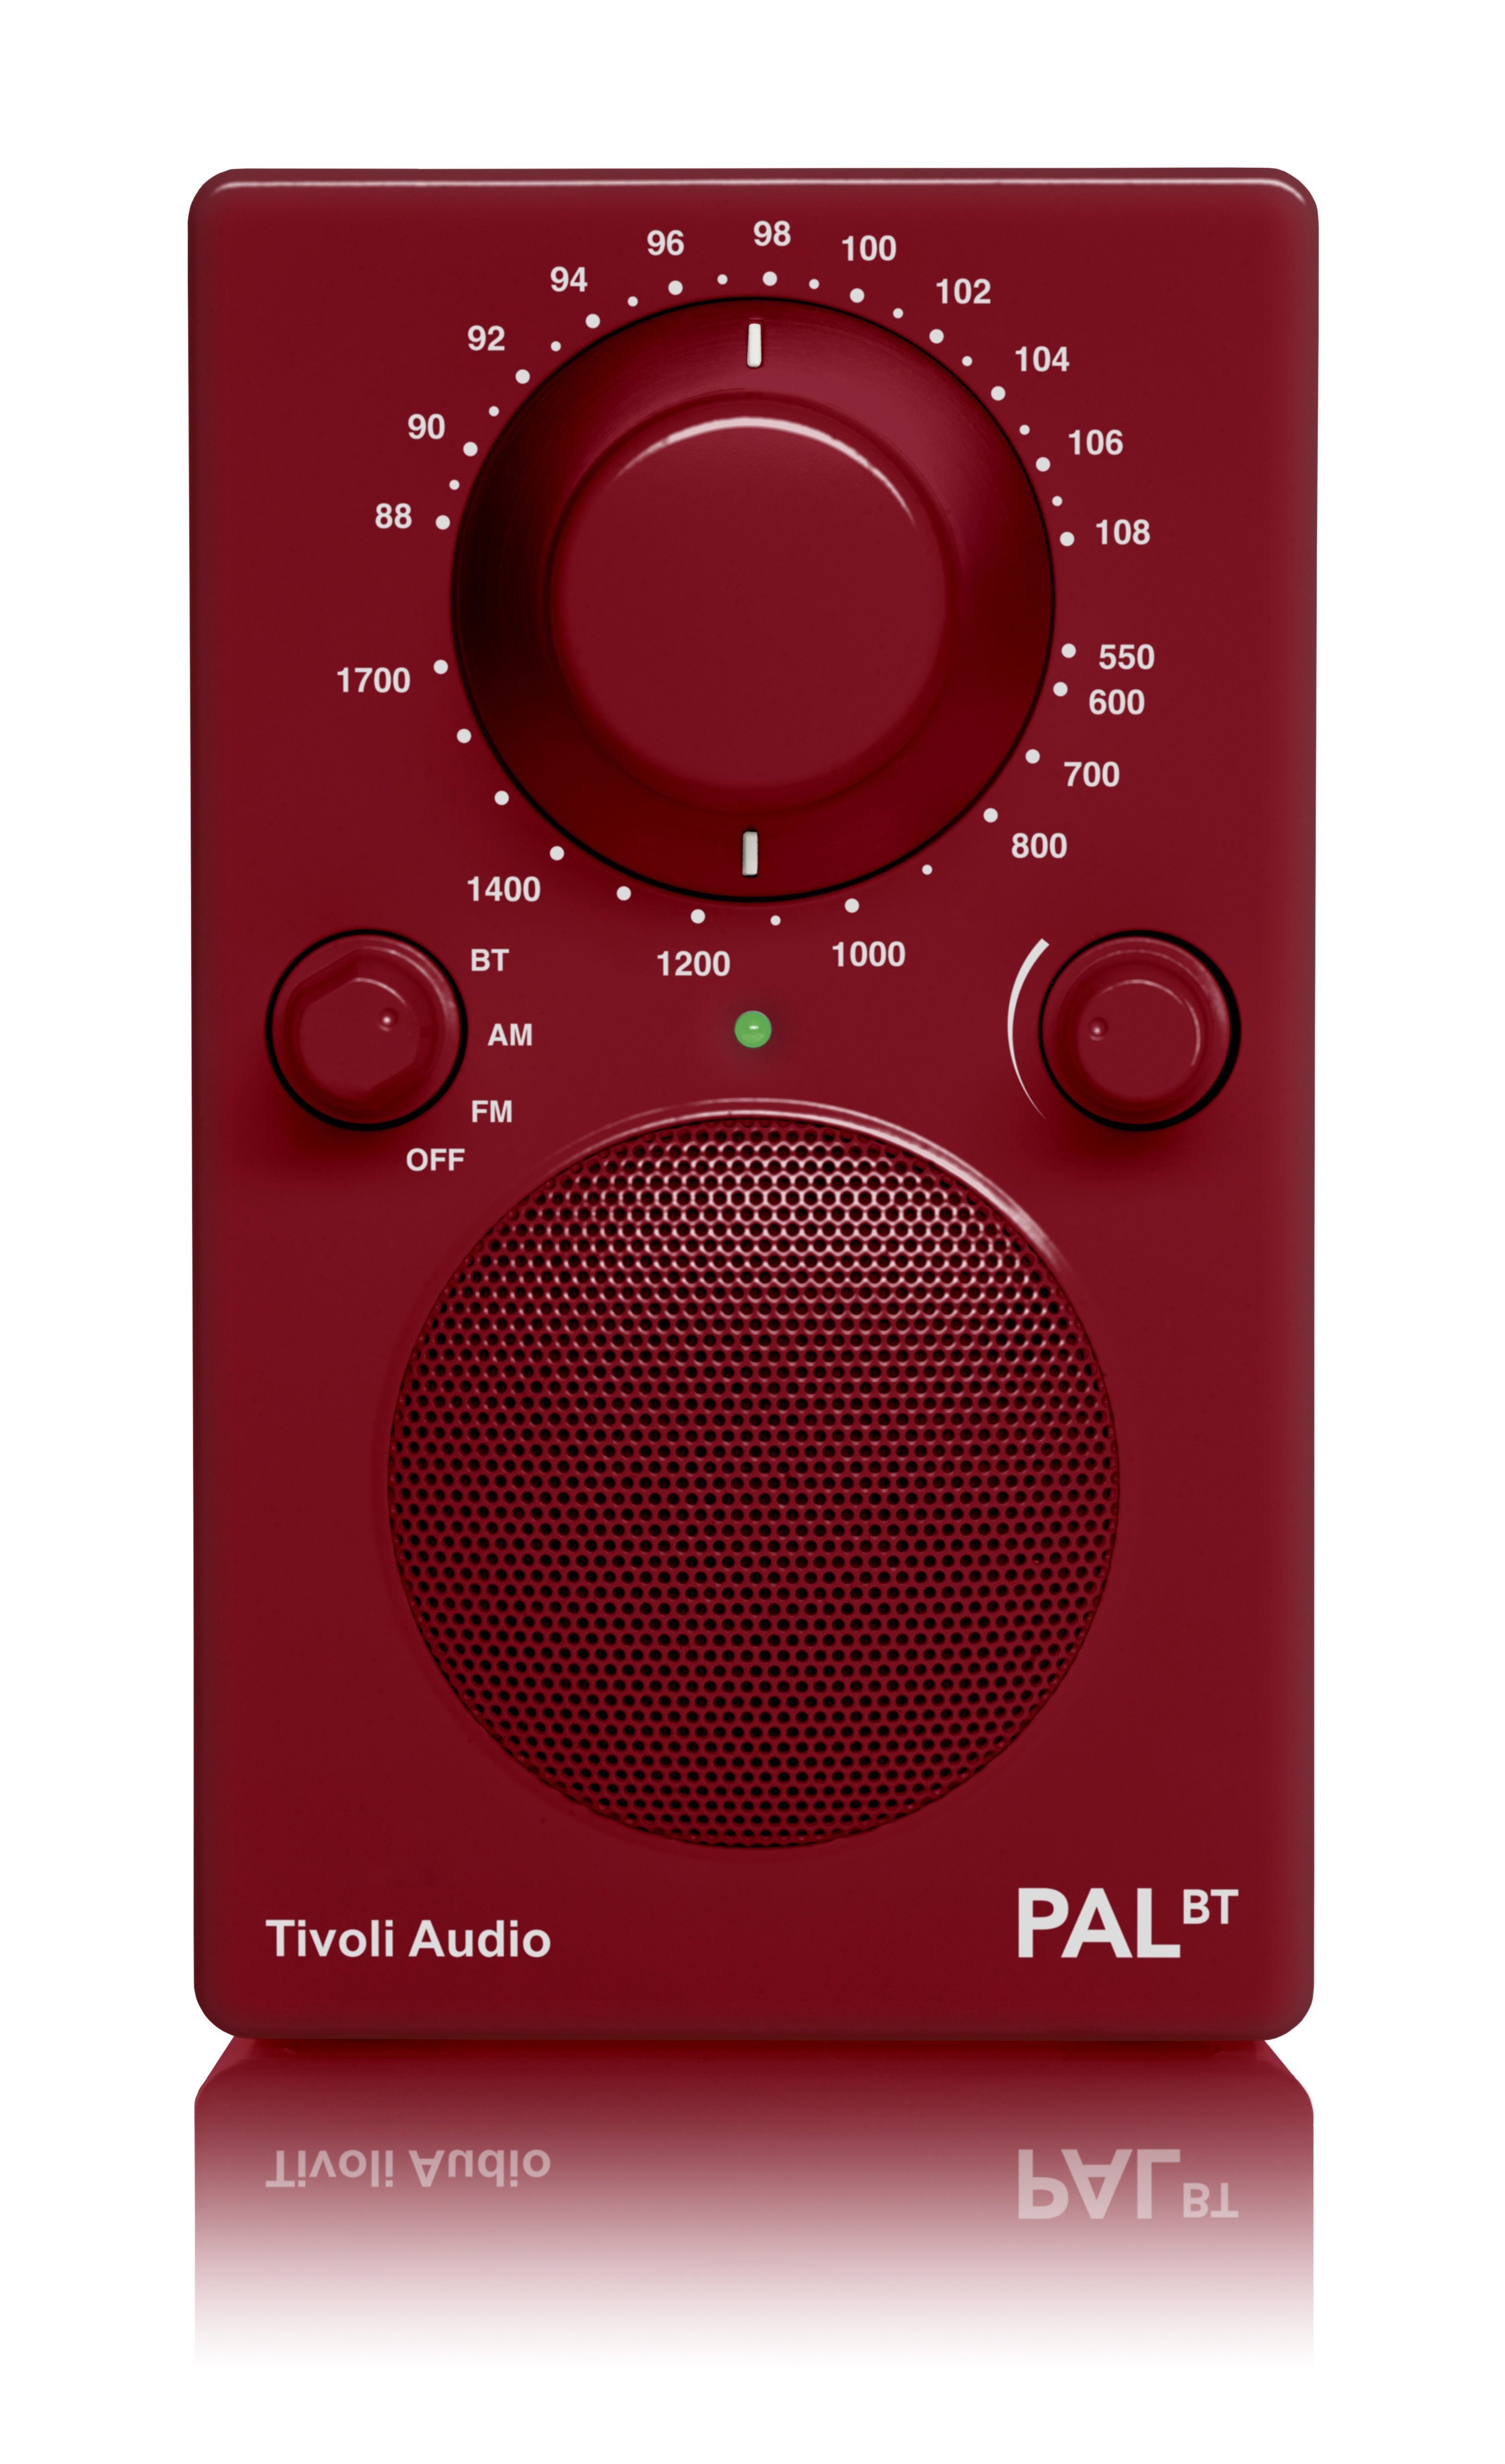 Tivoli Audio PAL BT Radio Tisch-Radio, Akku-Betrieb) Rot tragbar, (FM-Tuner, Bluetooth-Lautsprecher